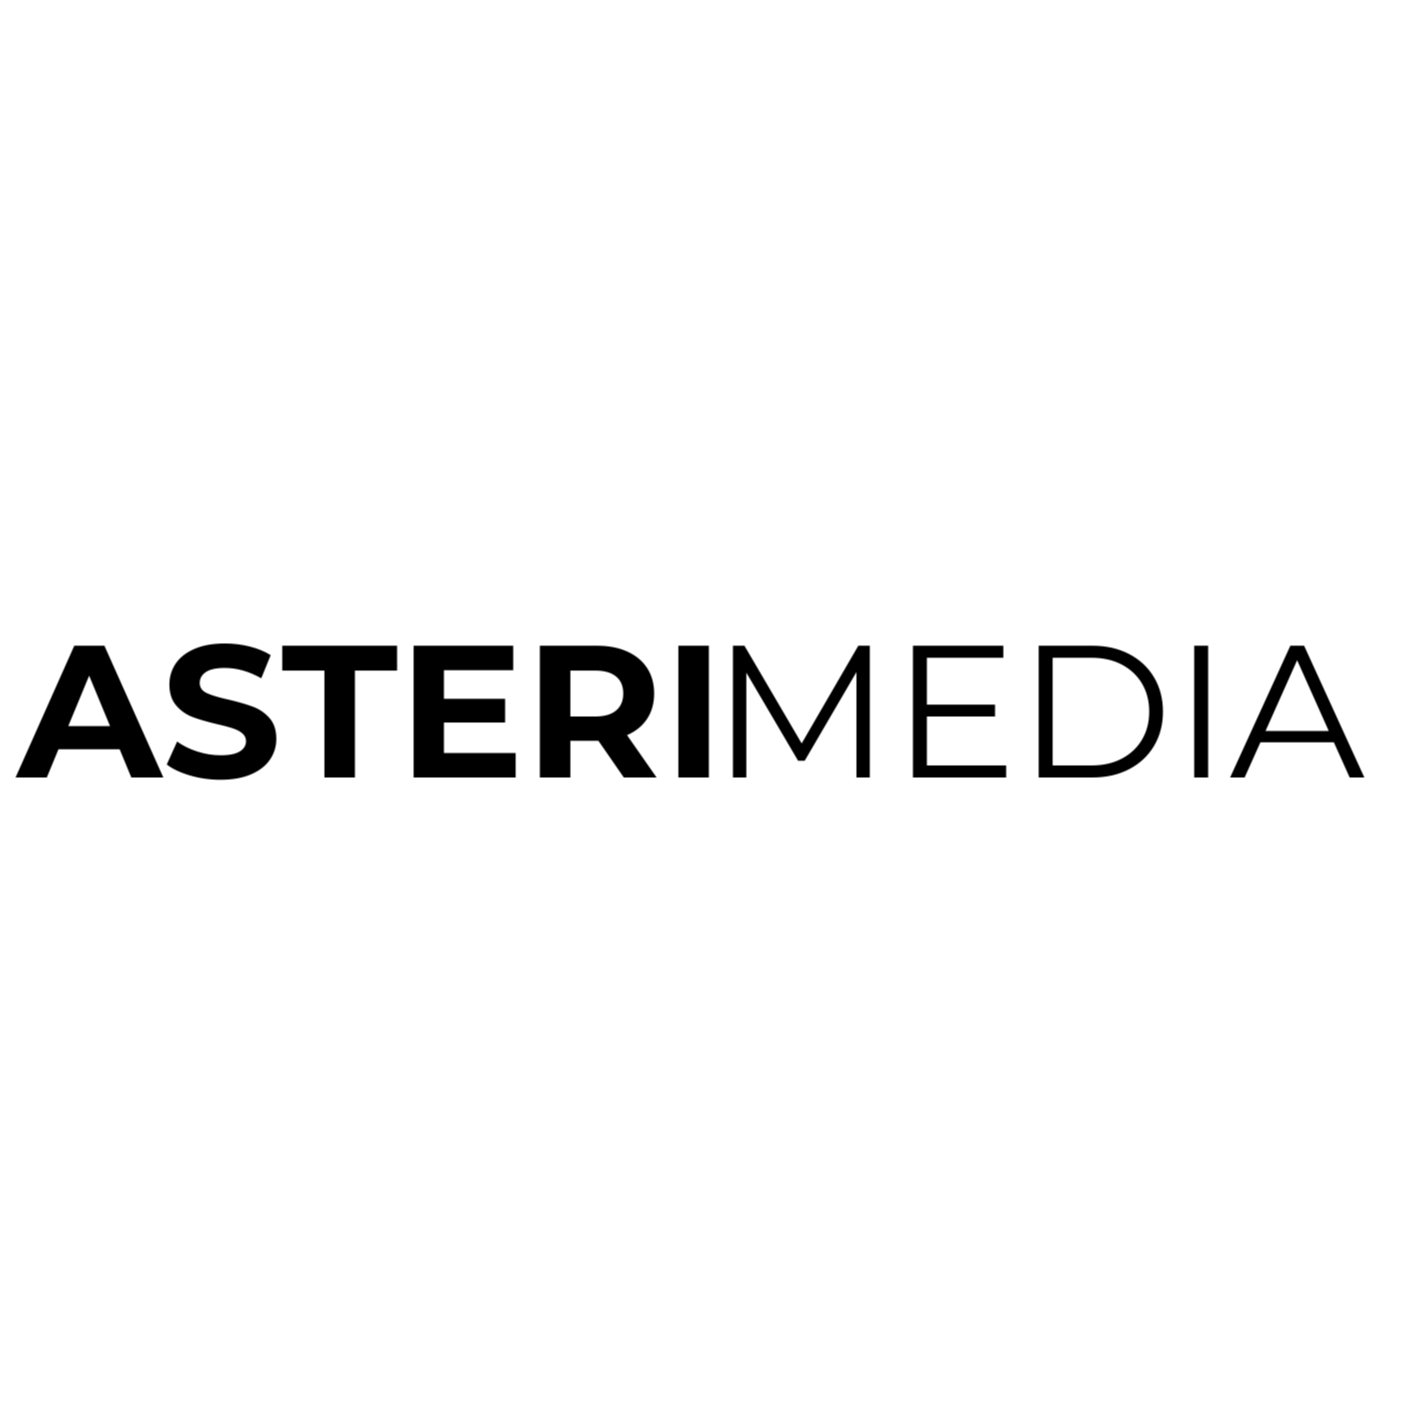 Asterimedia in München - Logo